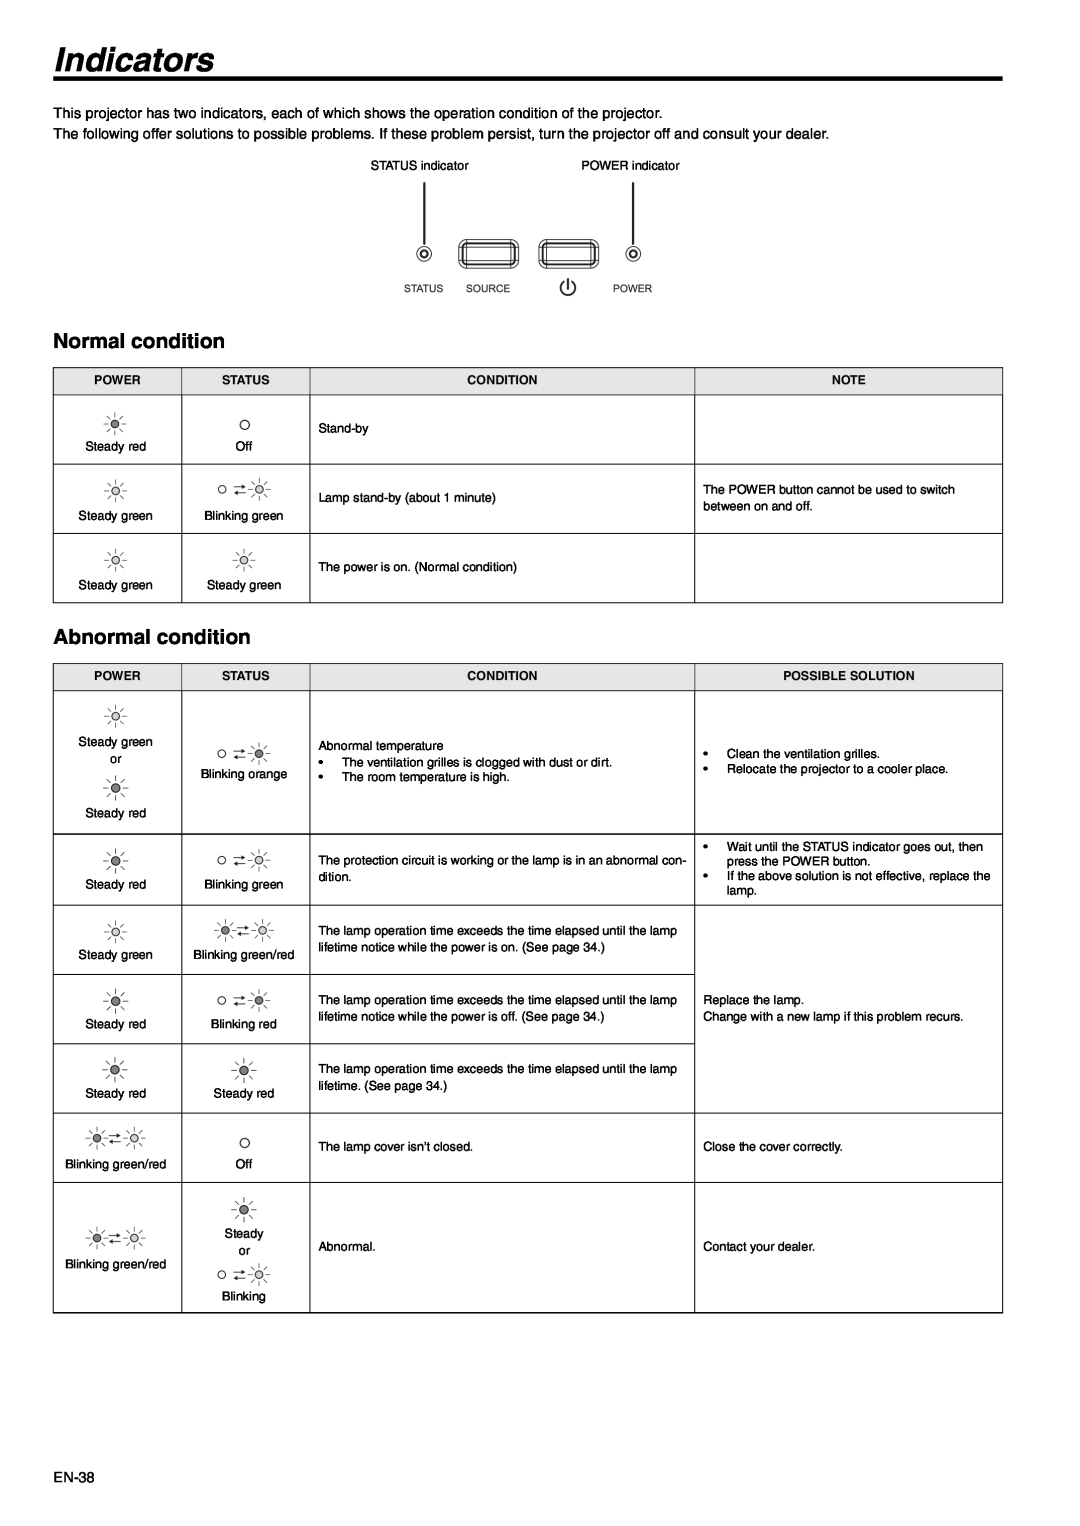 Mitsubishi Electronics XD280U-G, XD250U-G user manual Indicators, Normal condition, Abnormal condition 